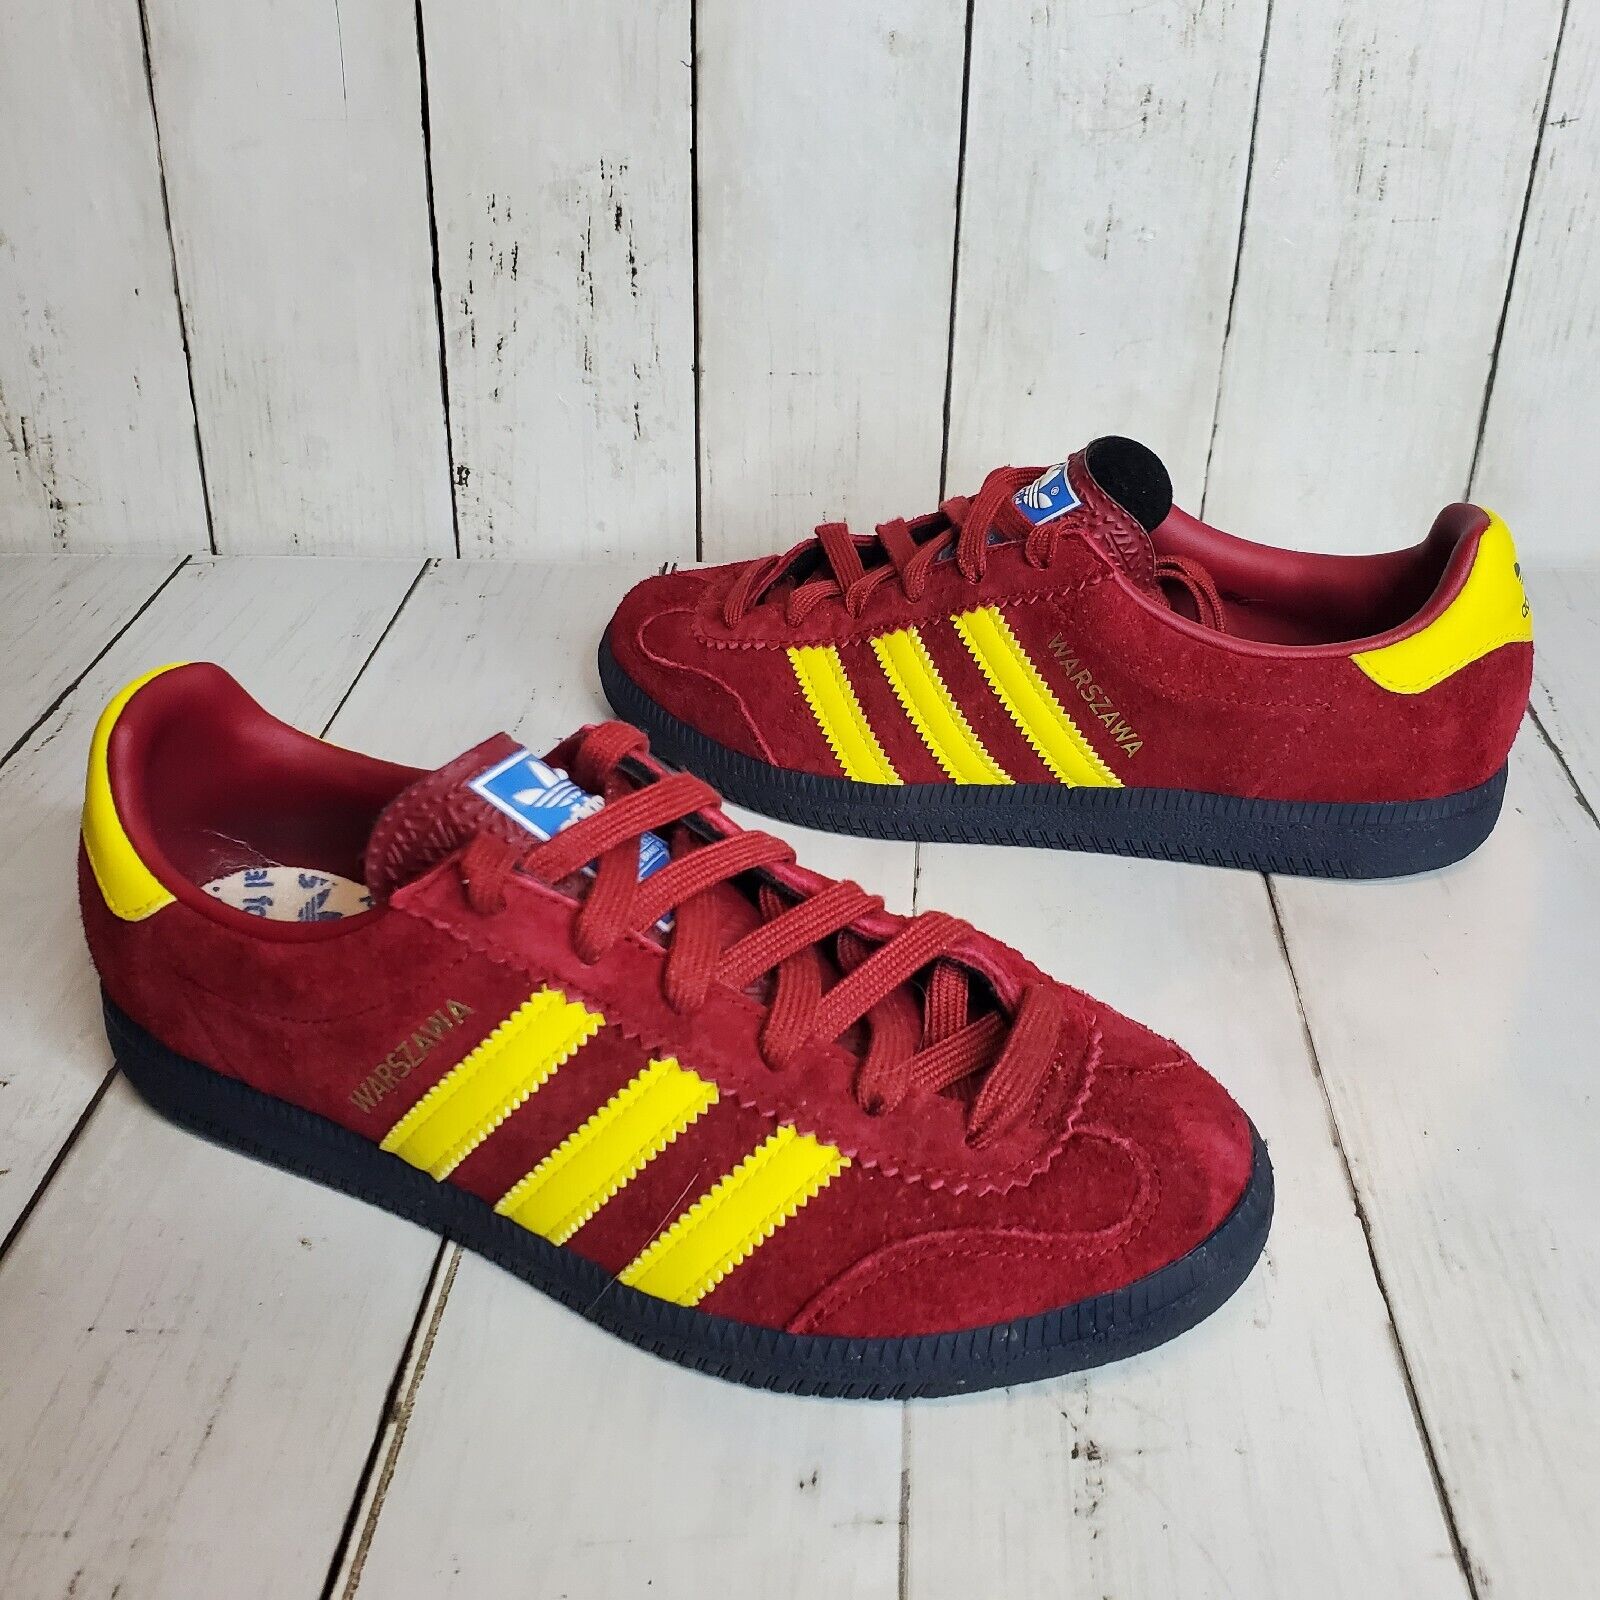 Karakter ned stole Adidas Warszawa SPZL Retro Trainers Shoes Mens Sz 4.5 GX3819 Red Yellow  WMNS 5.5 | eBay